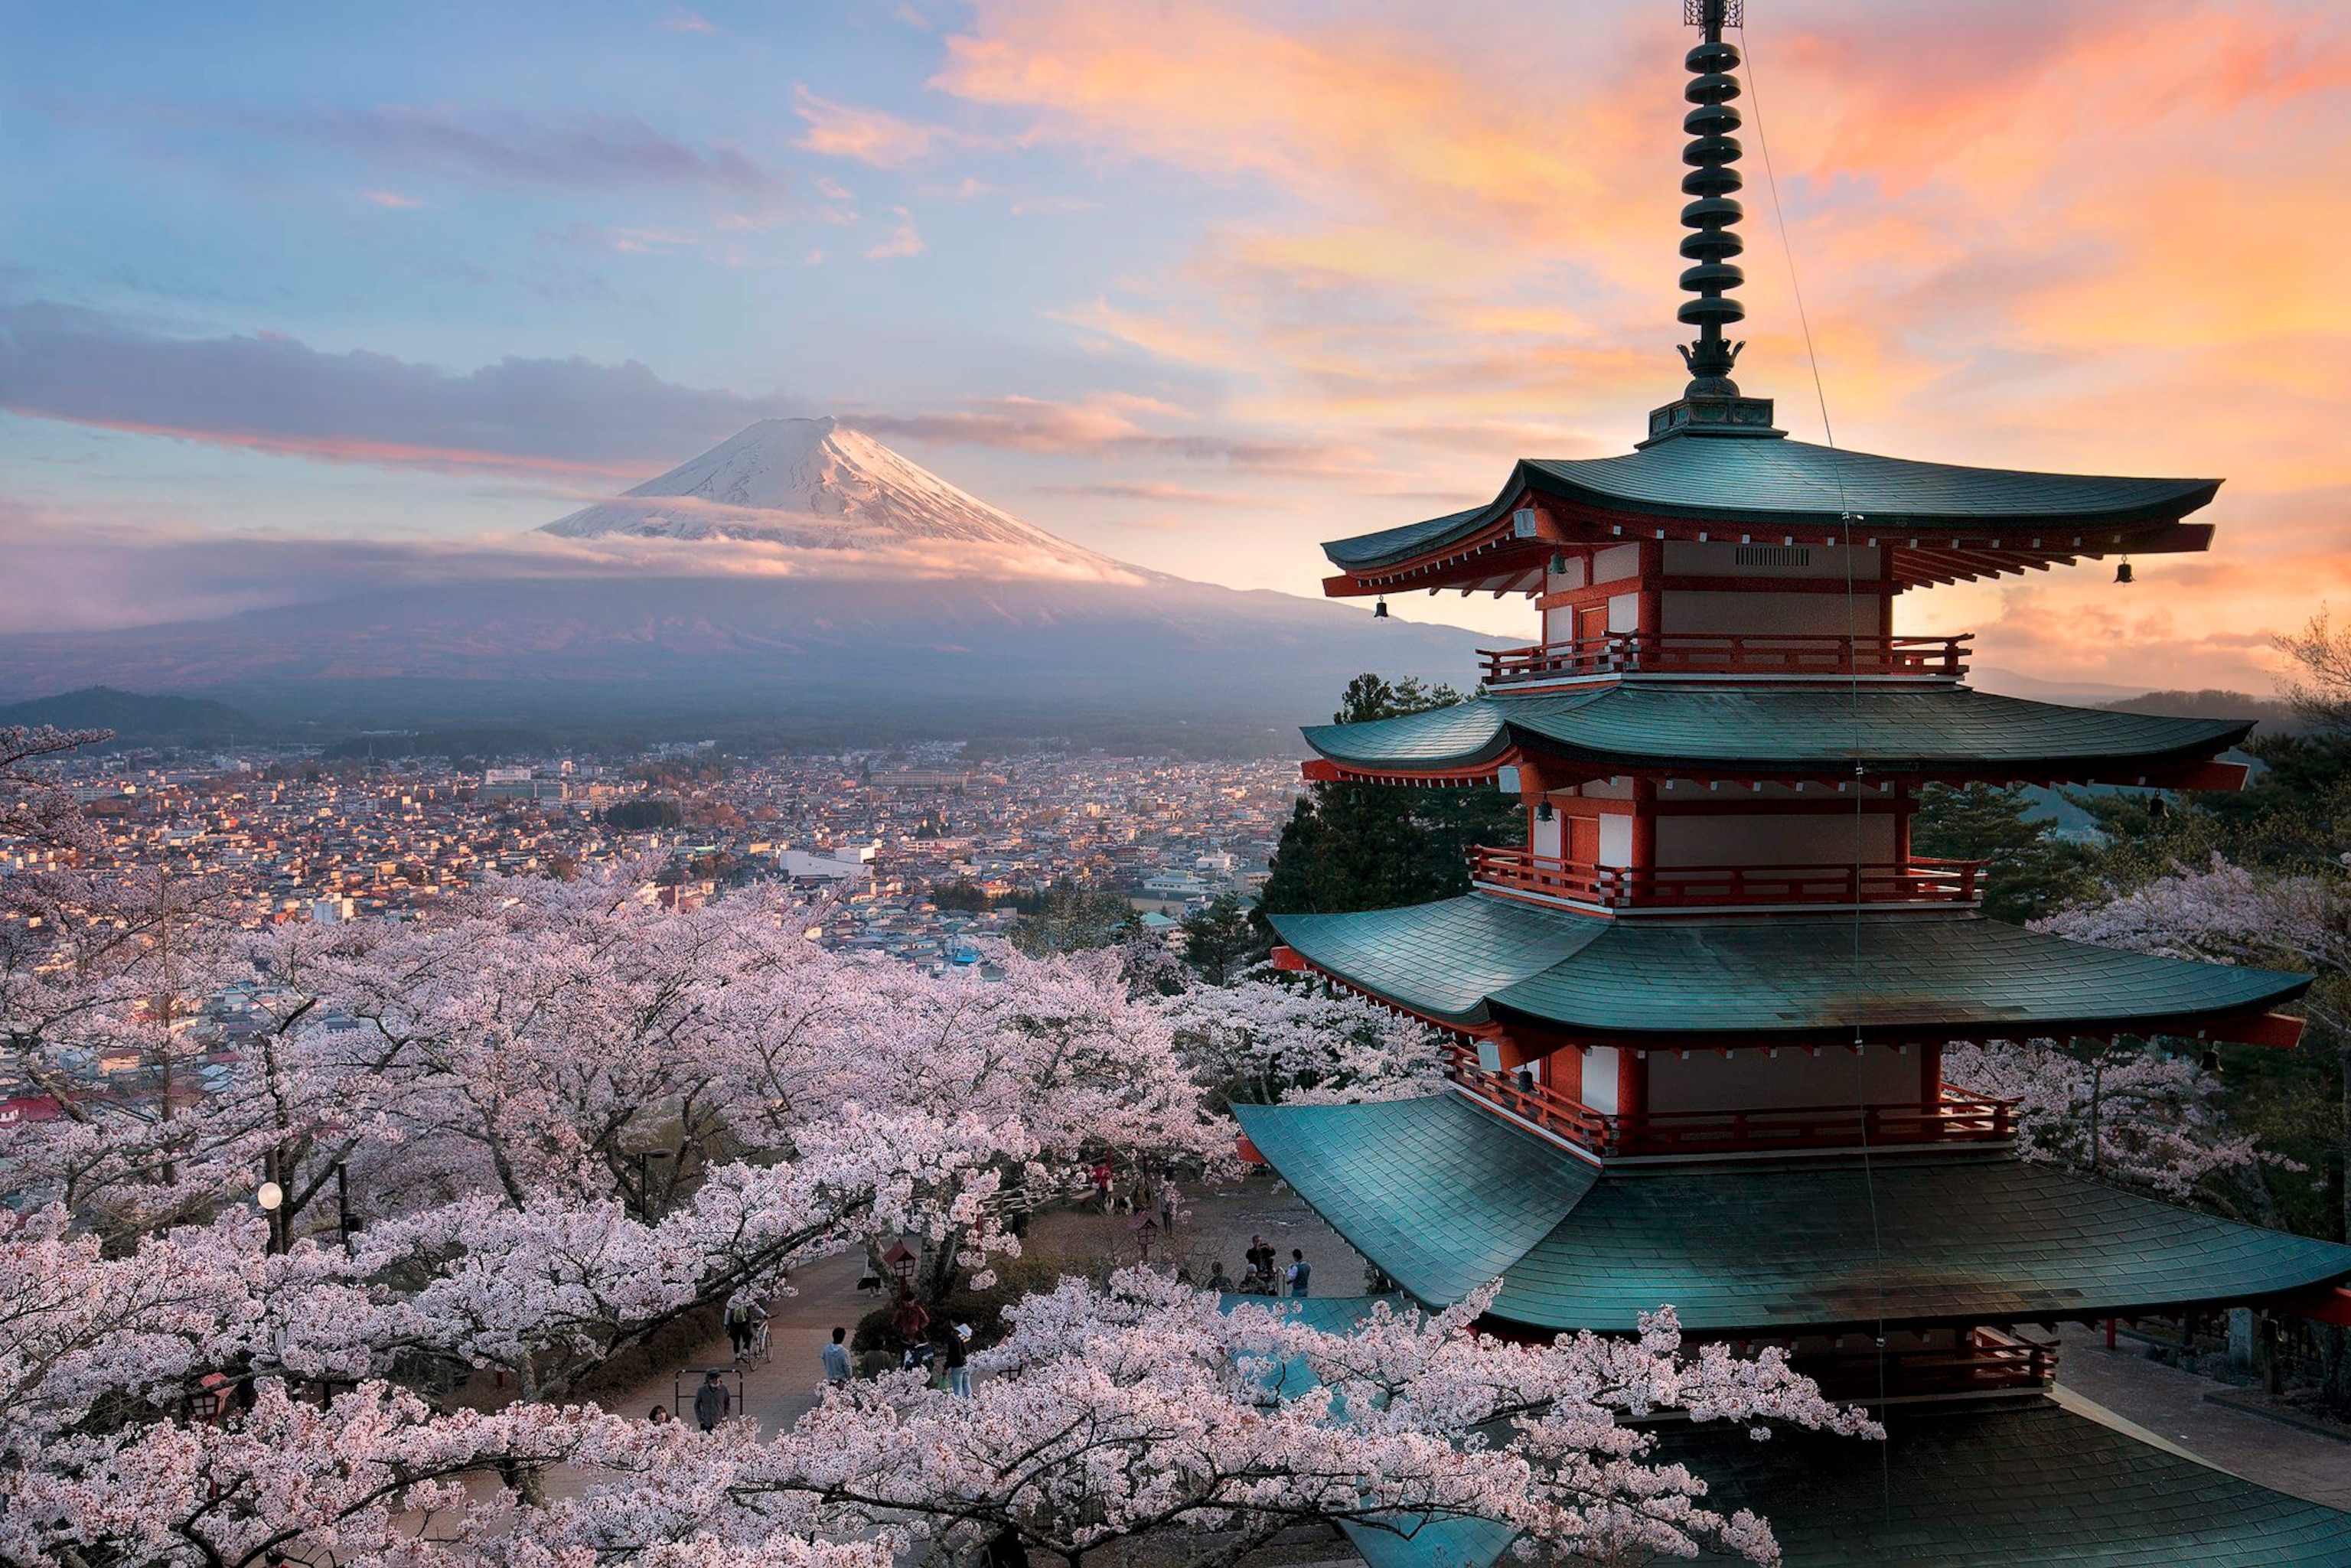 General 3072x2049 Japan cherry blossom nature landscape mountains Mount Fuji building Asian architecture flowers clouds architecture